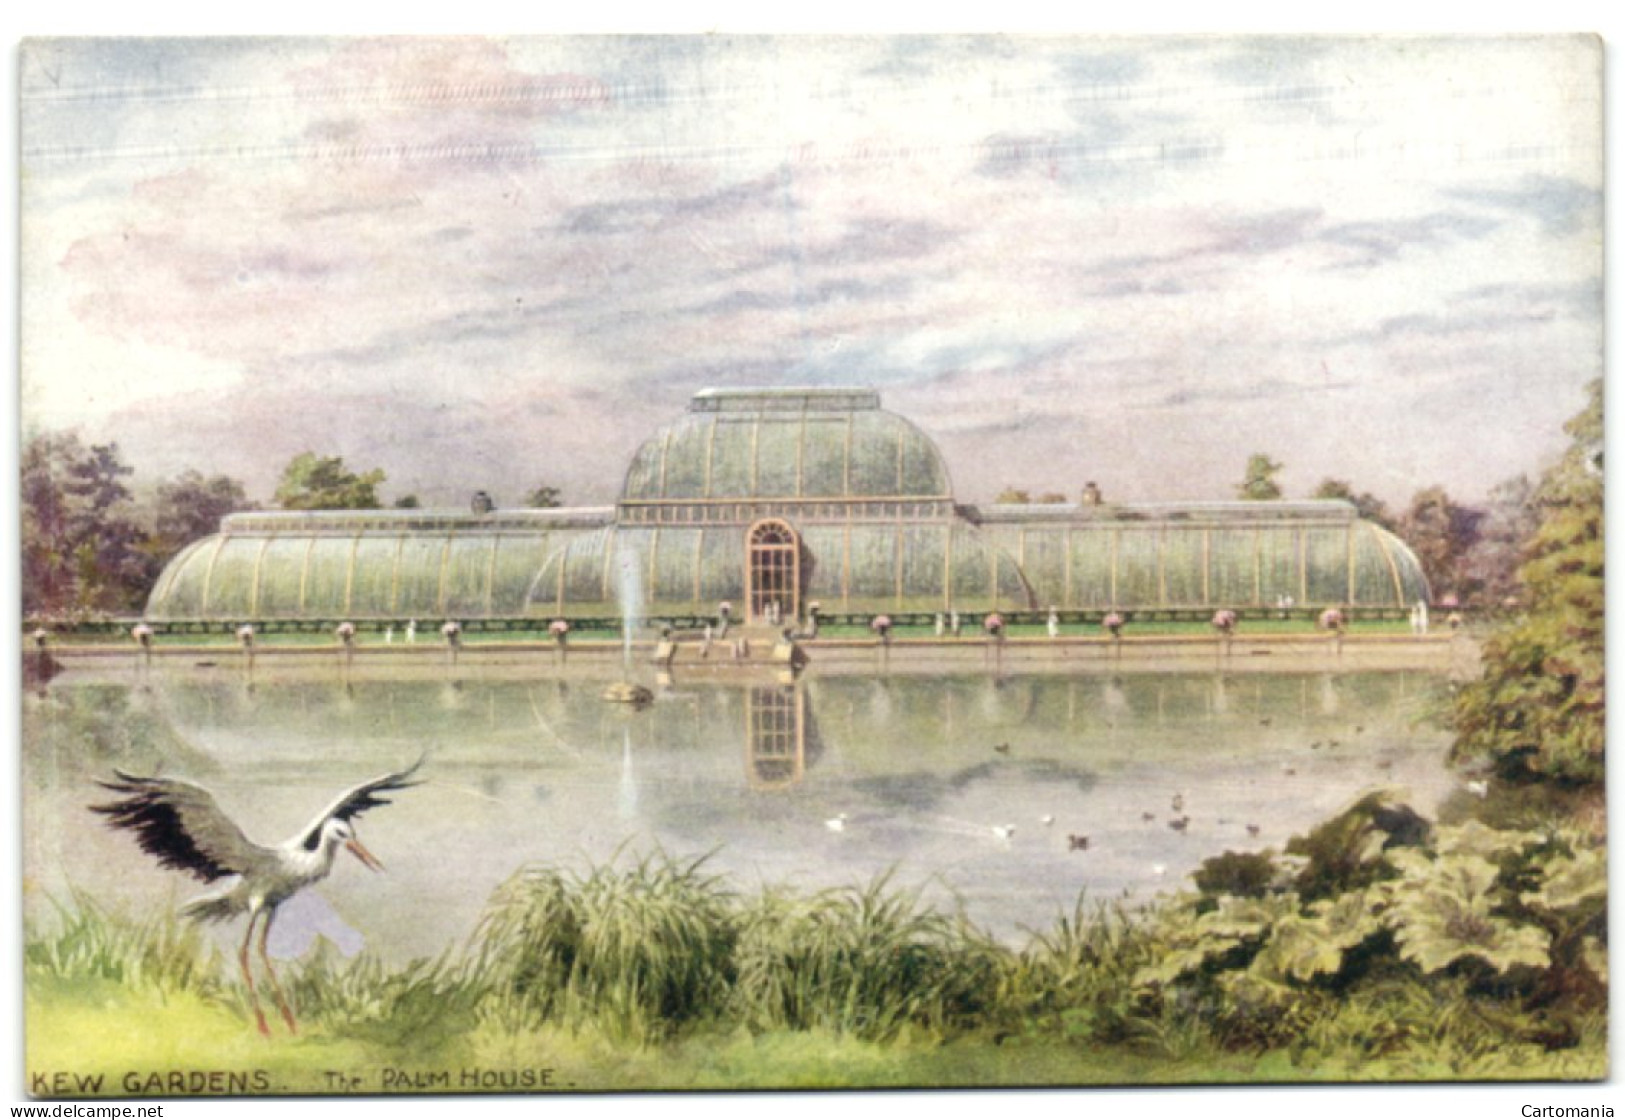 Kew Gardens - The Palm House - London Suburbs